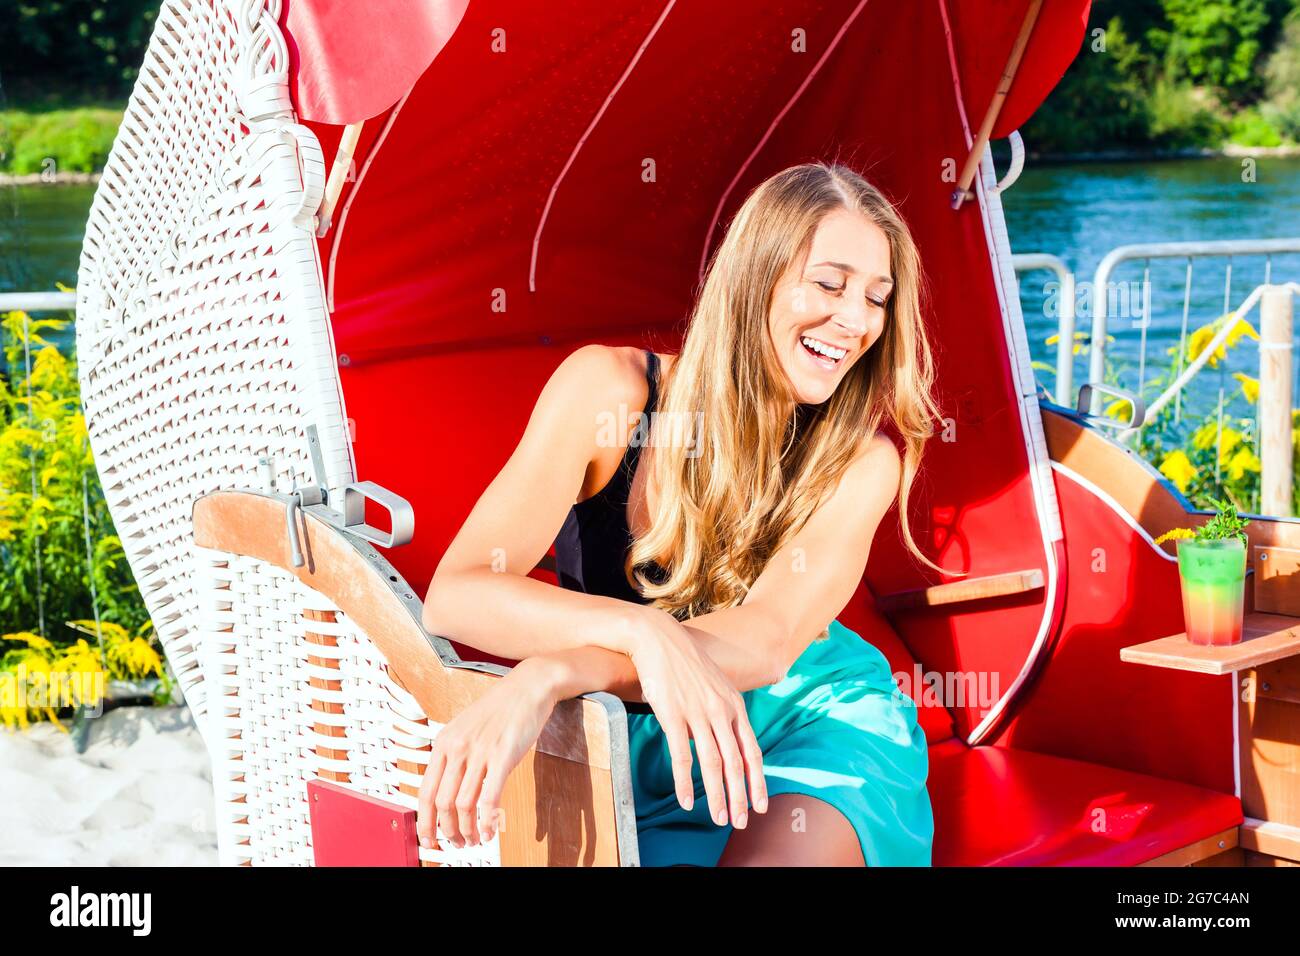 Giovane donna rilassante in vimini sedia al banco del bar in spiaggia Foto Stock